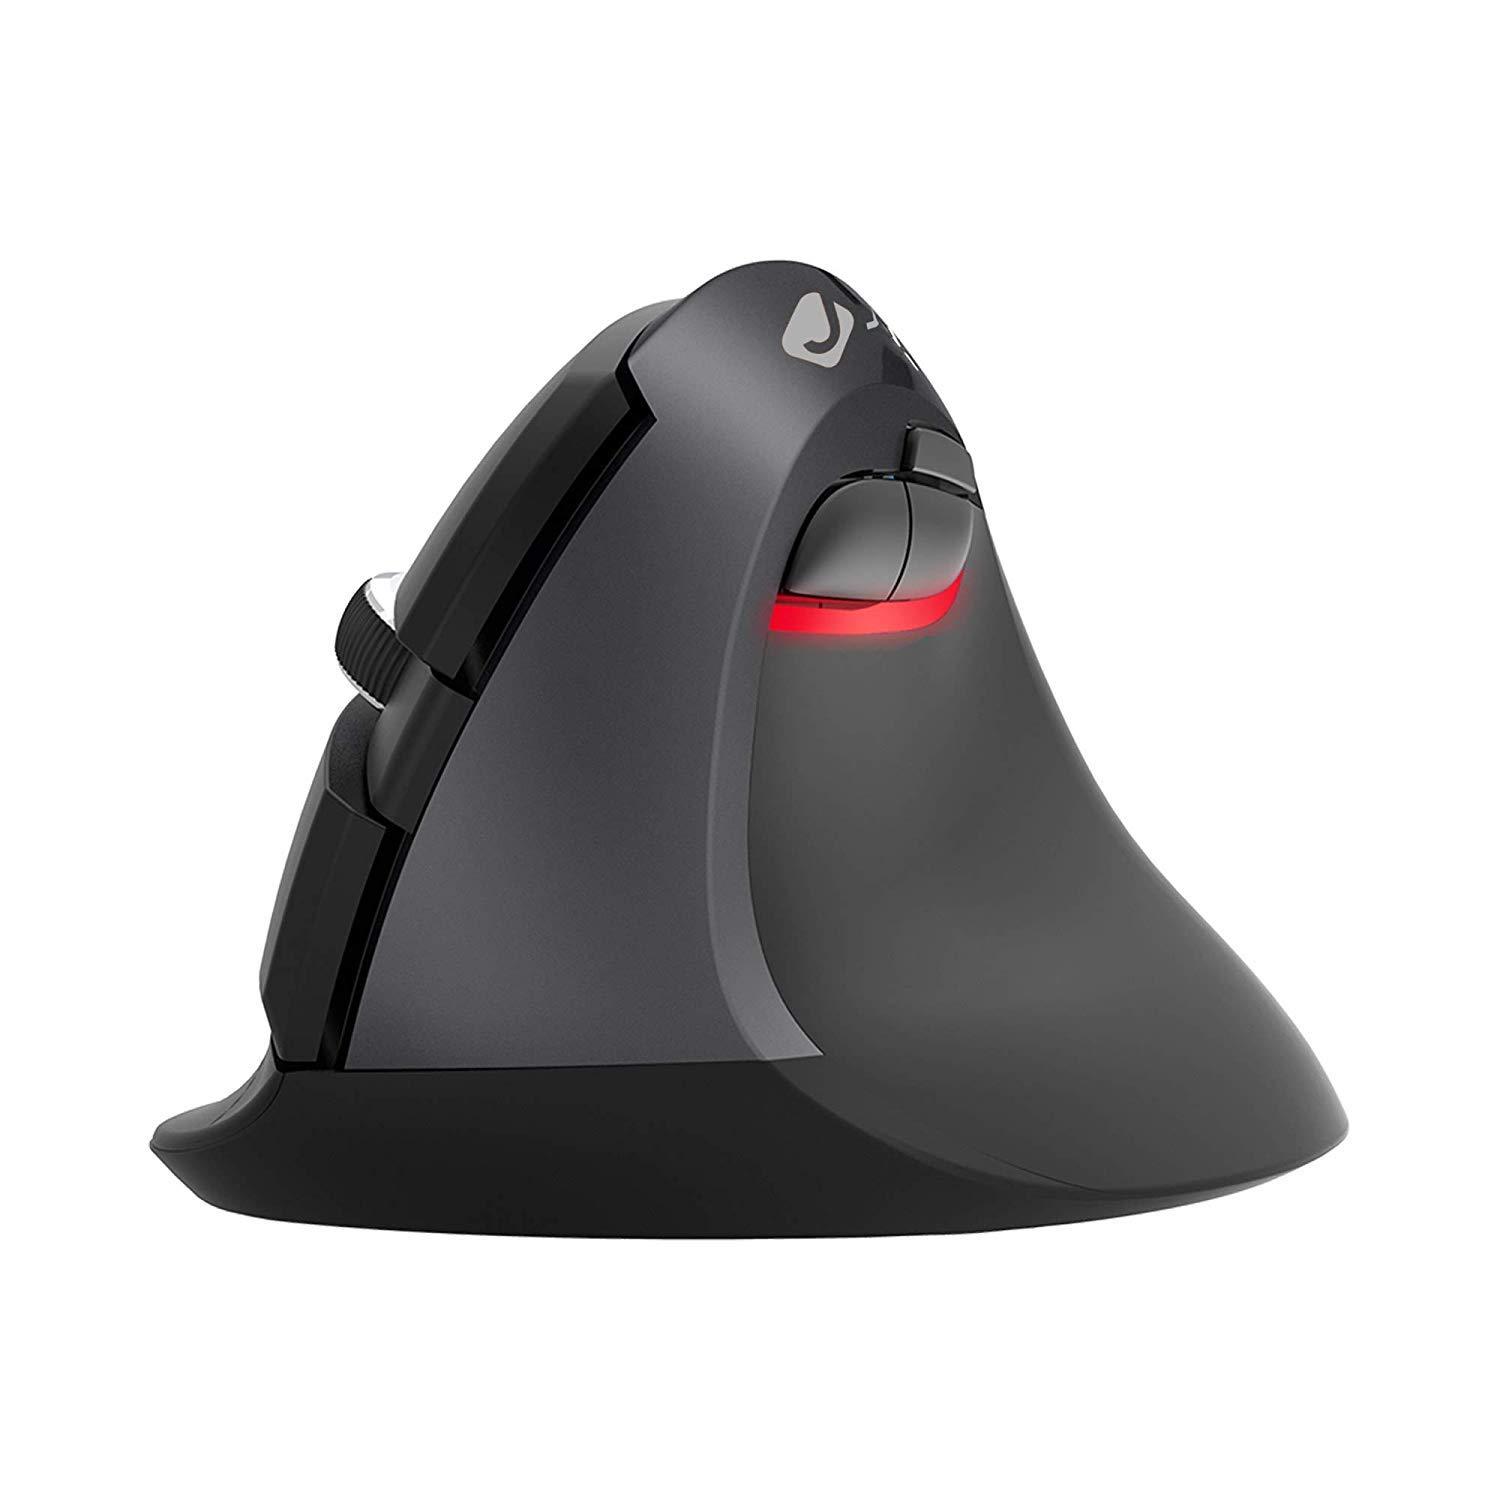 Wireless Ergonomic Vertical Mouse with USB 1600 DPI Black